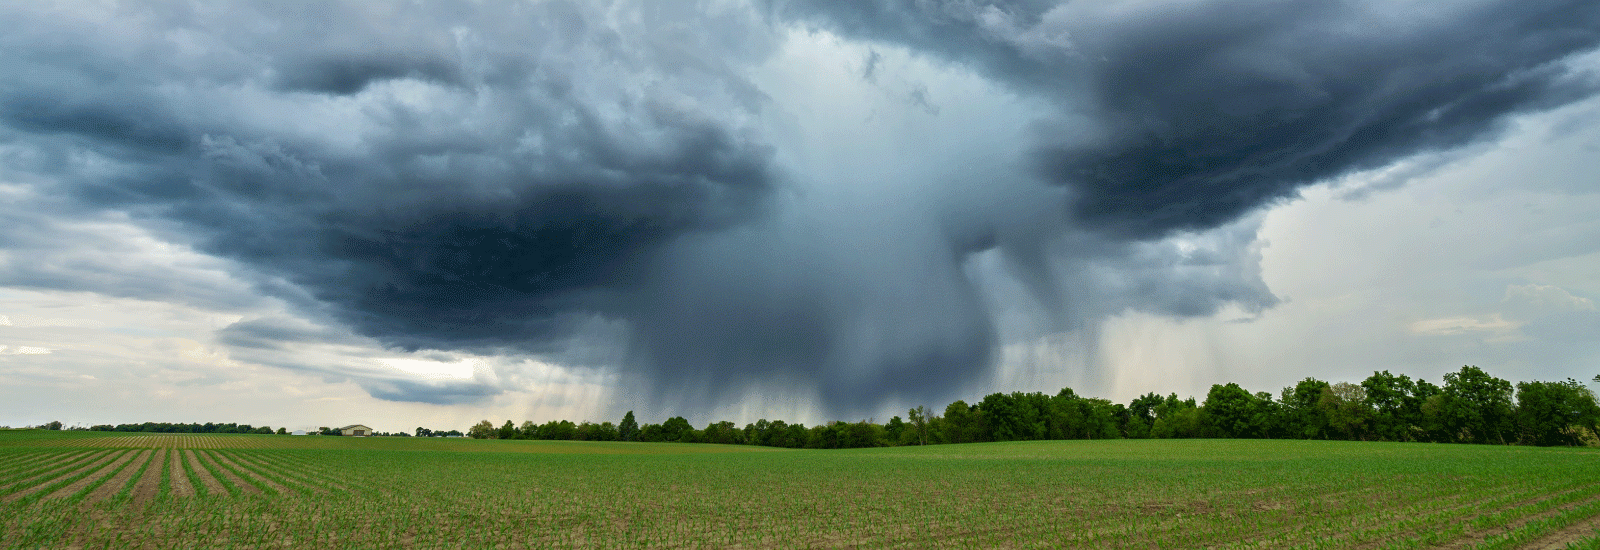 Storm in a field.